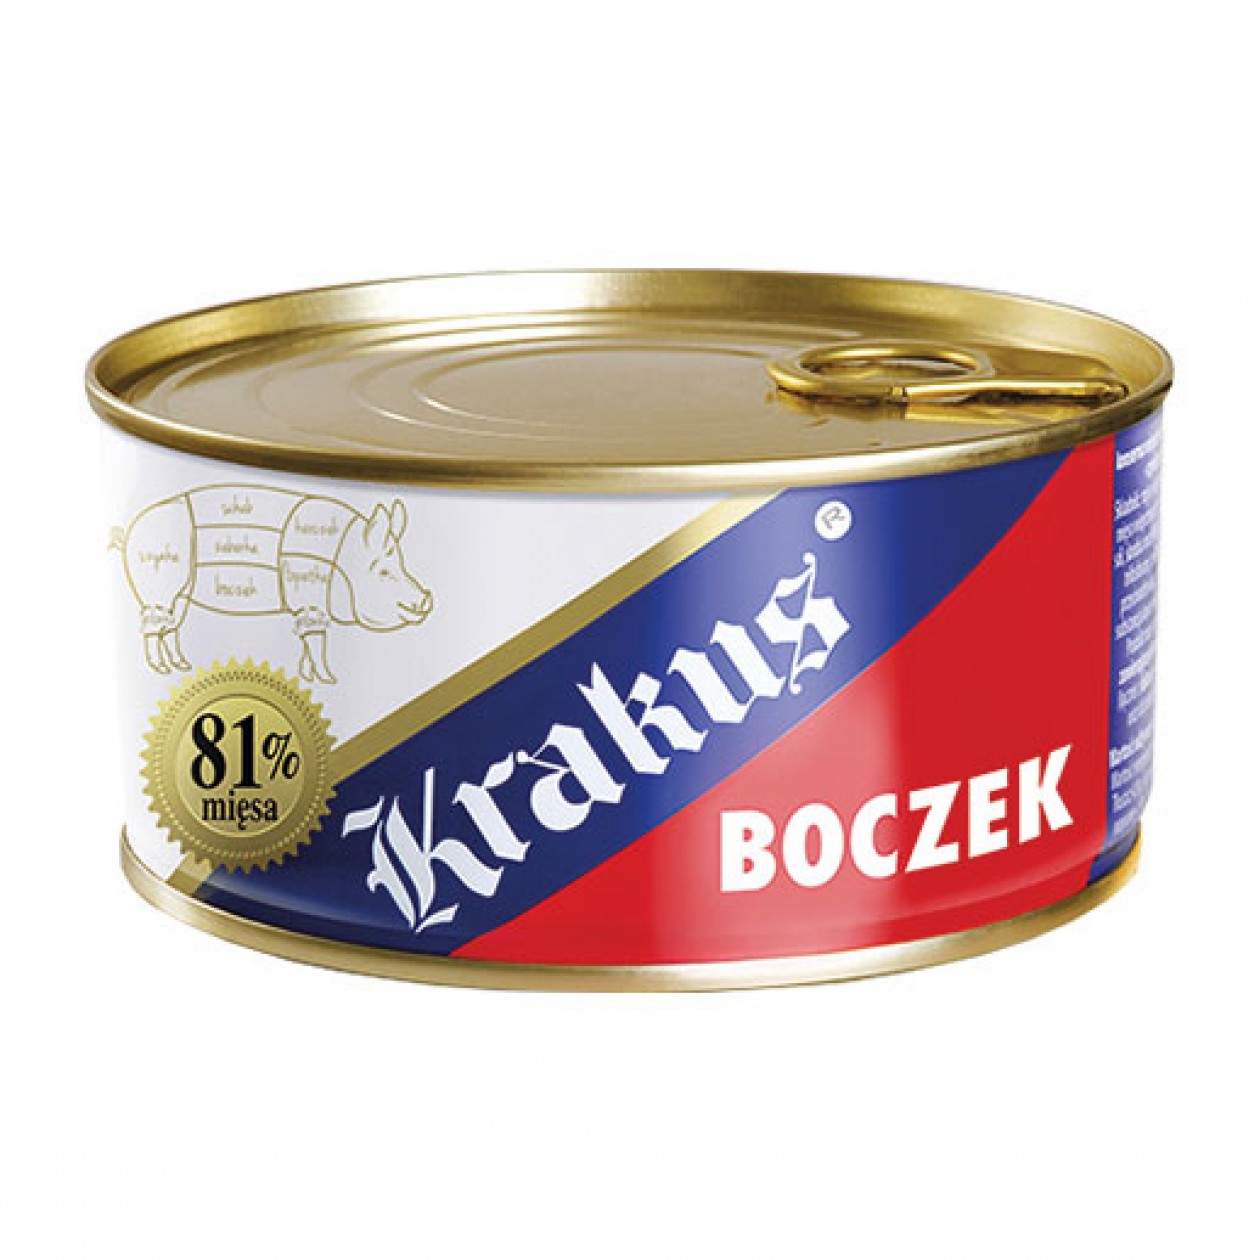 Krakus Canned Meat Boczek (1) 6x300g